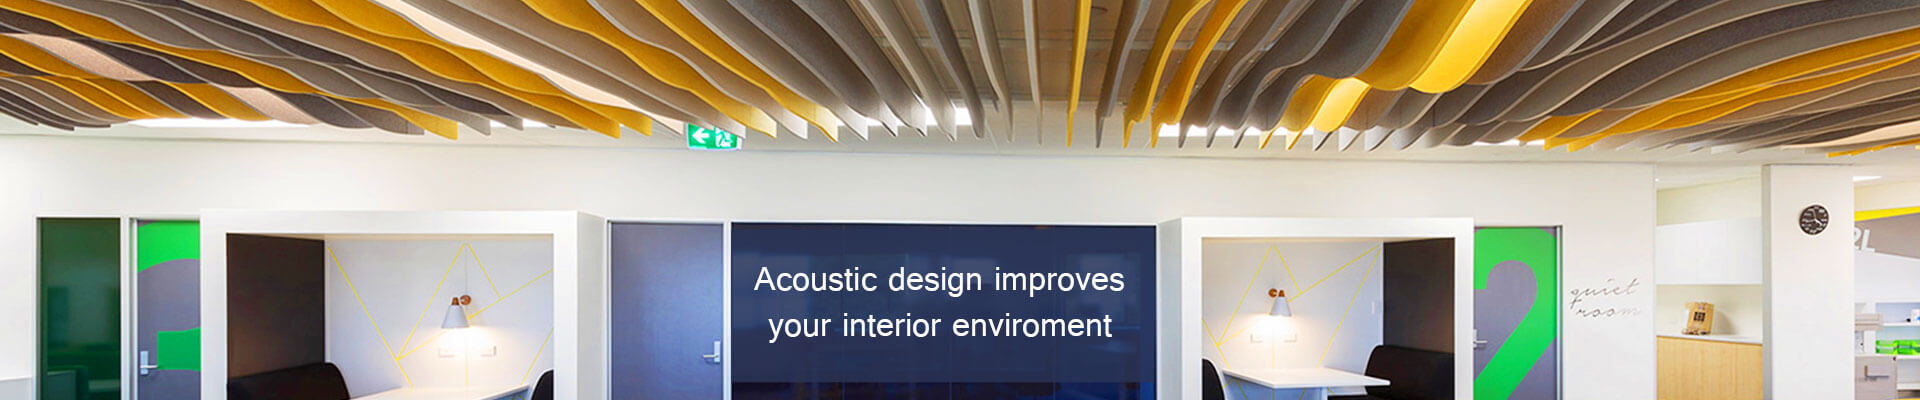 Acoustic design improves your interior enviroment